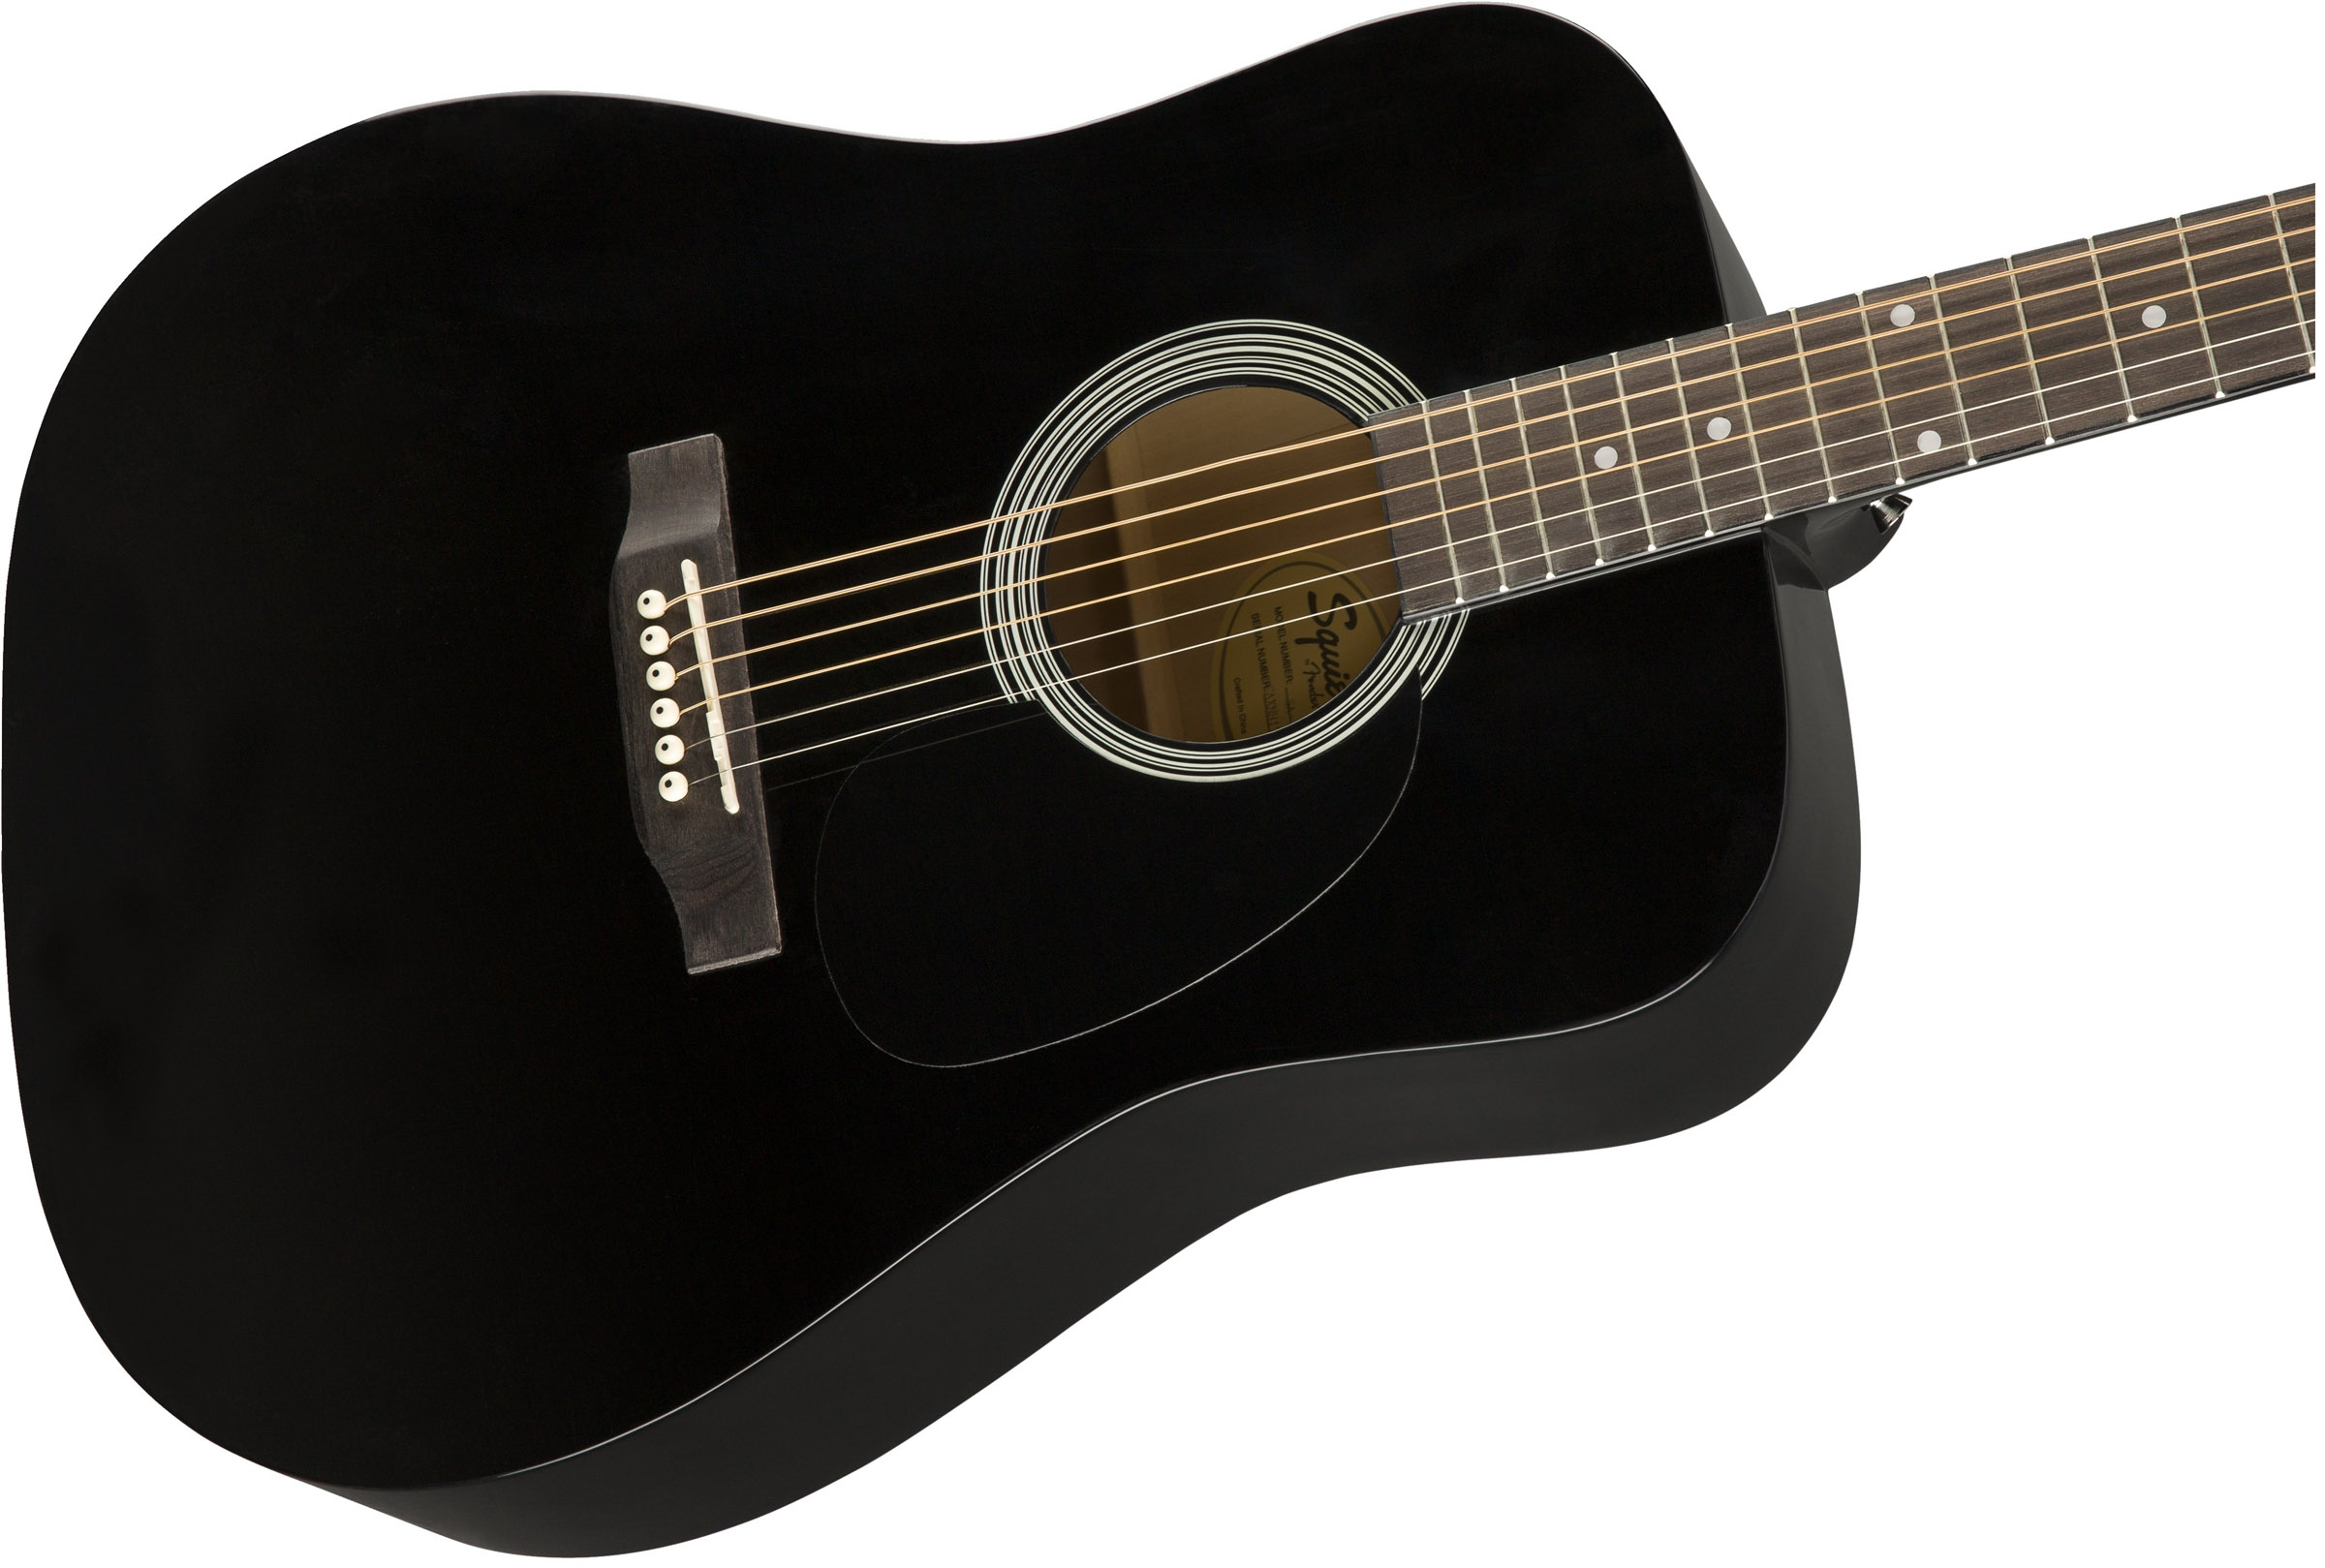 Fender Squier Dreadnought Acoustic Guitar - Black 885978857005 | eBay